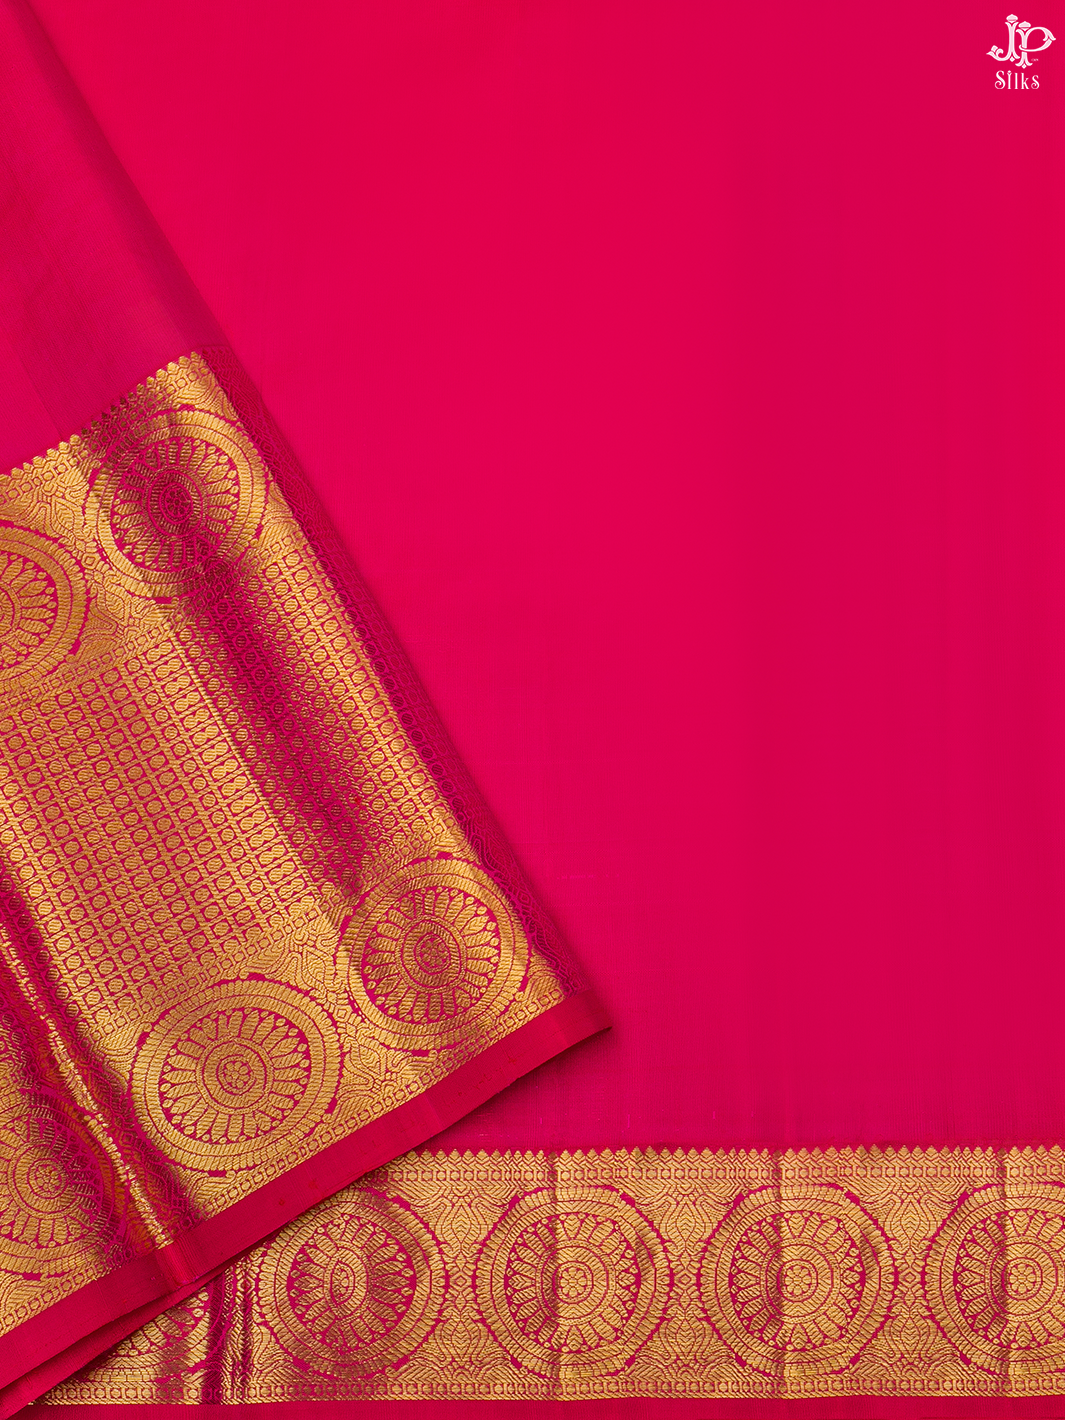 Cream and Reddish Pink Kanchipuram Silk Saree - A7235 - View 4